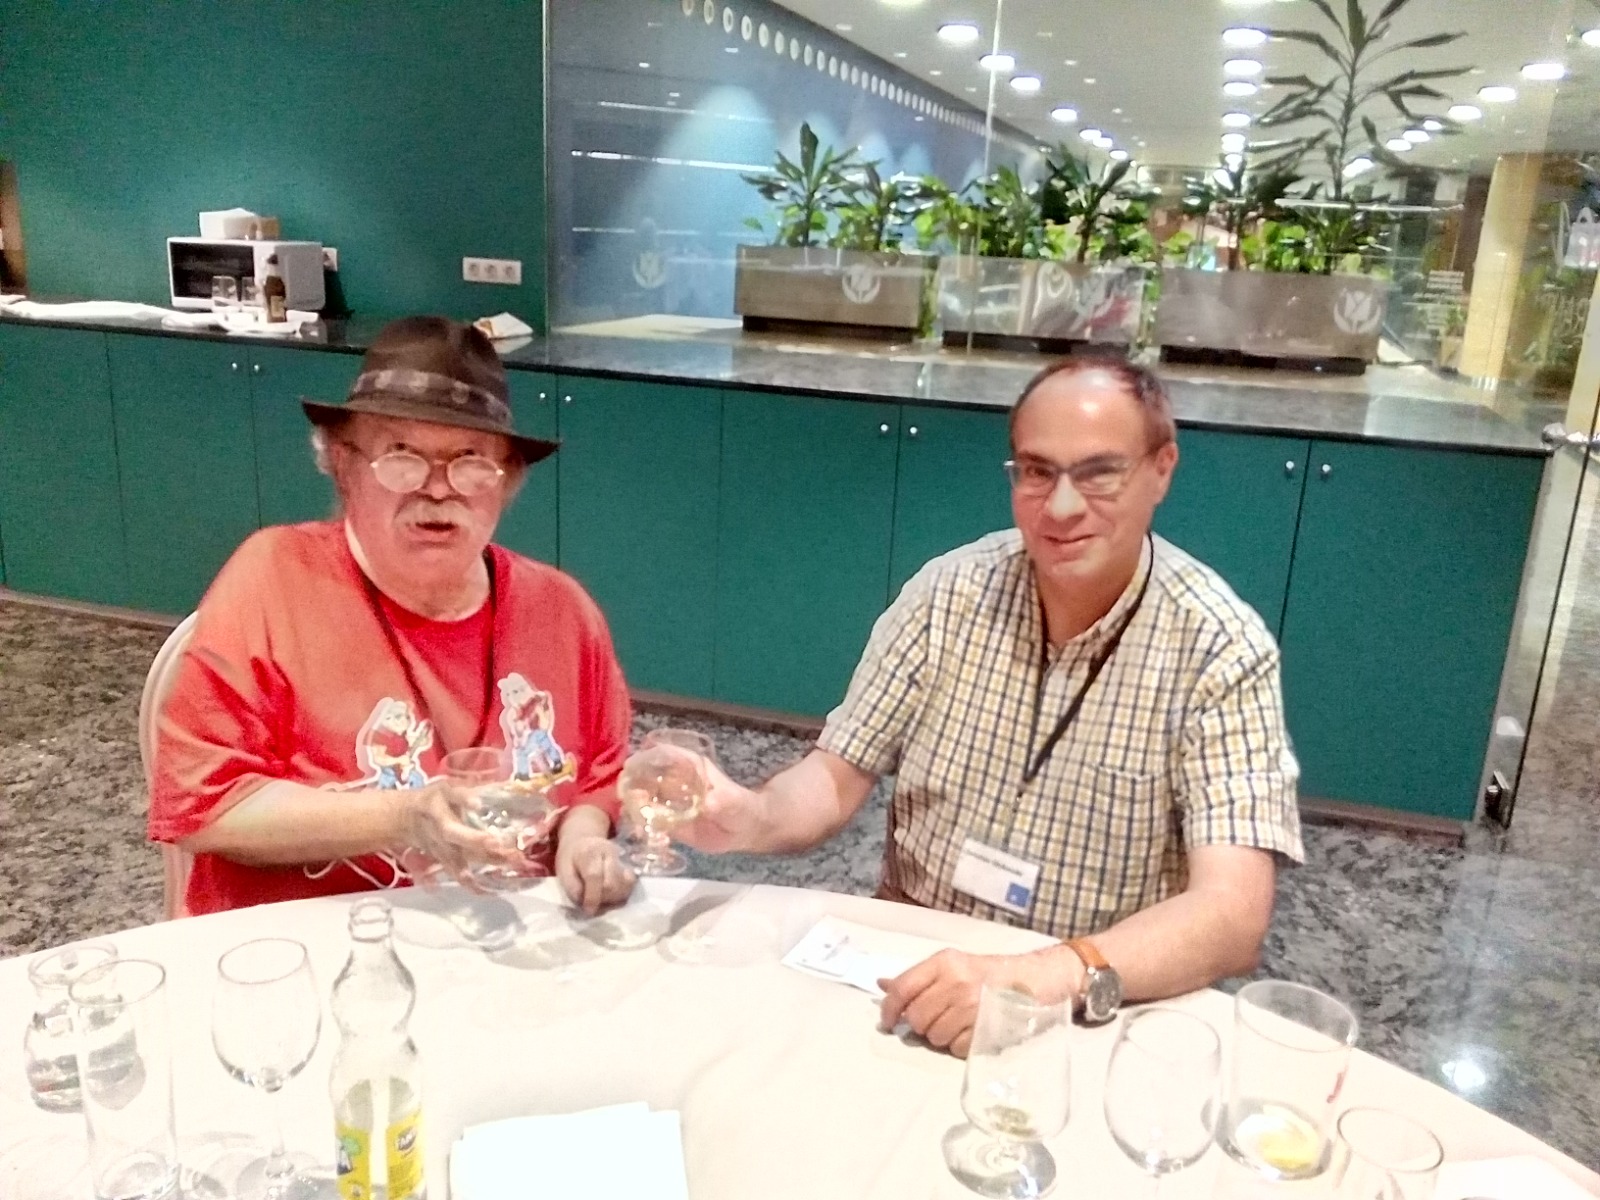 Dario Monferini and Christian Ghibaudo at the 2019 EDXC conference in Andorra